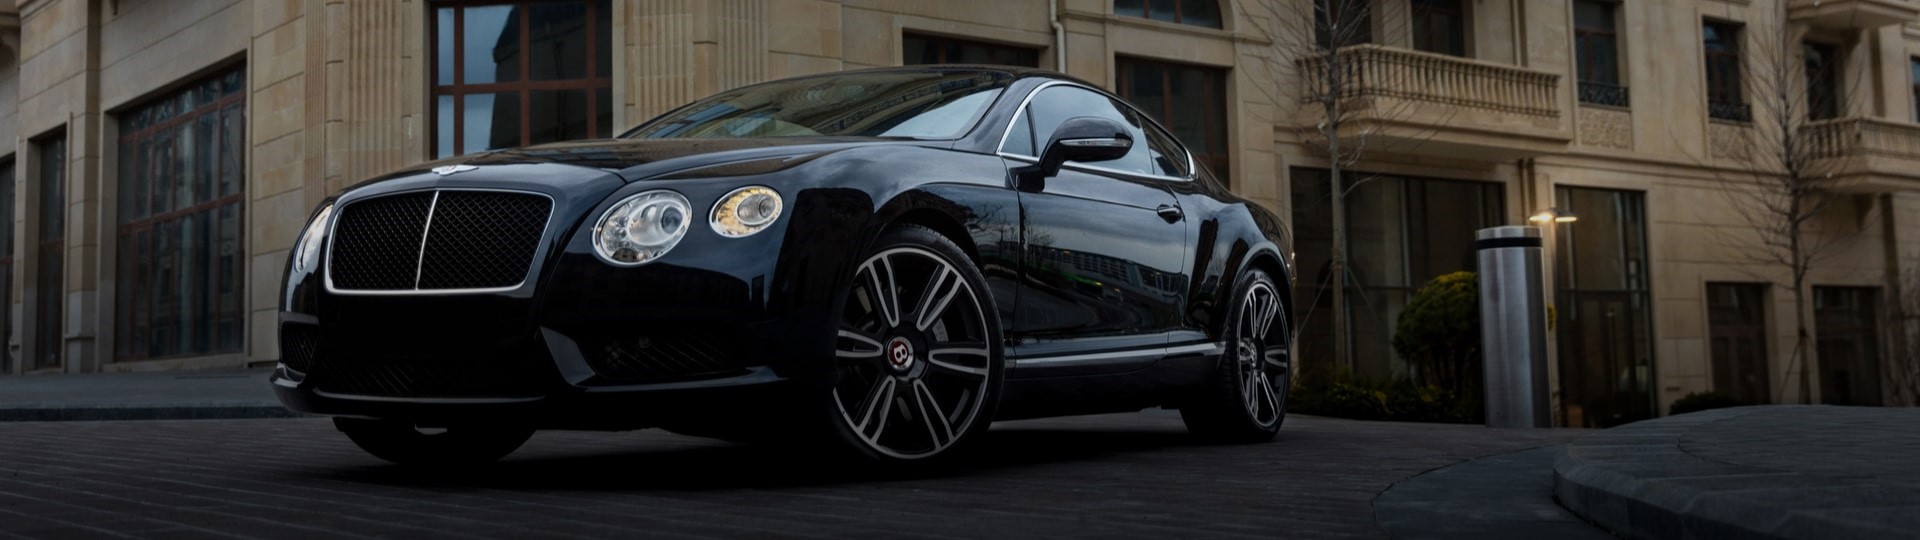 Bentley plánuje do roku 2030 elektrifikaci svého sortimentu